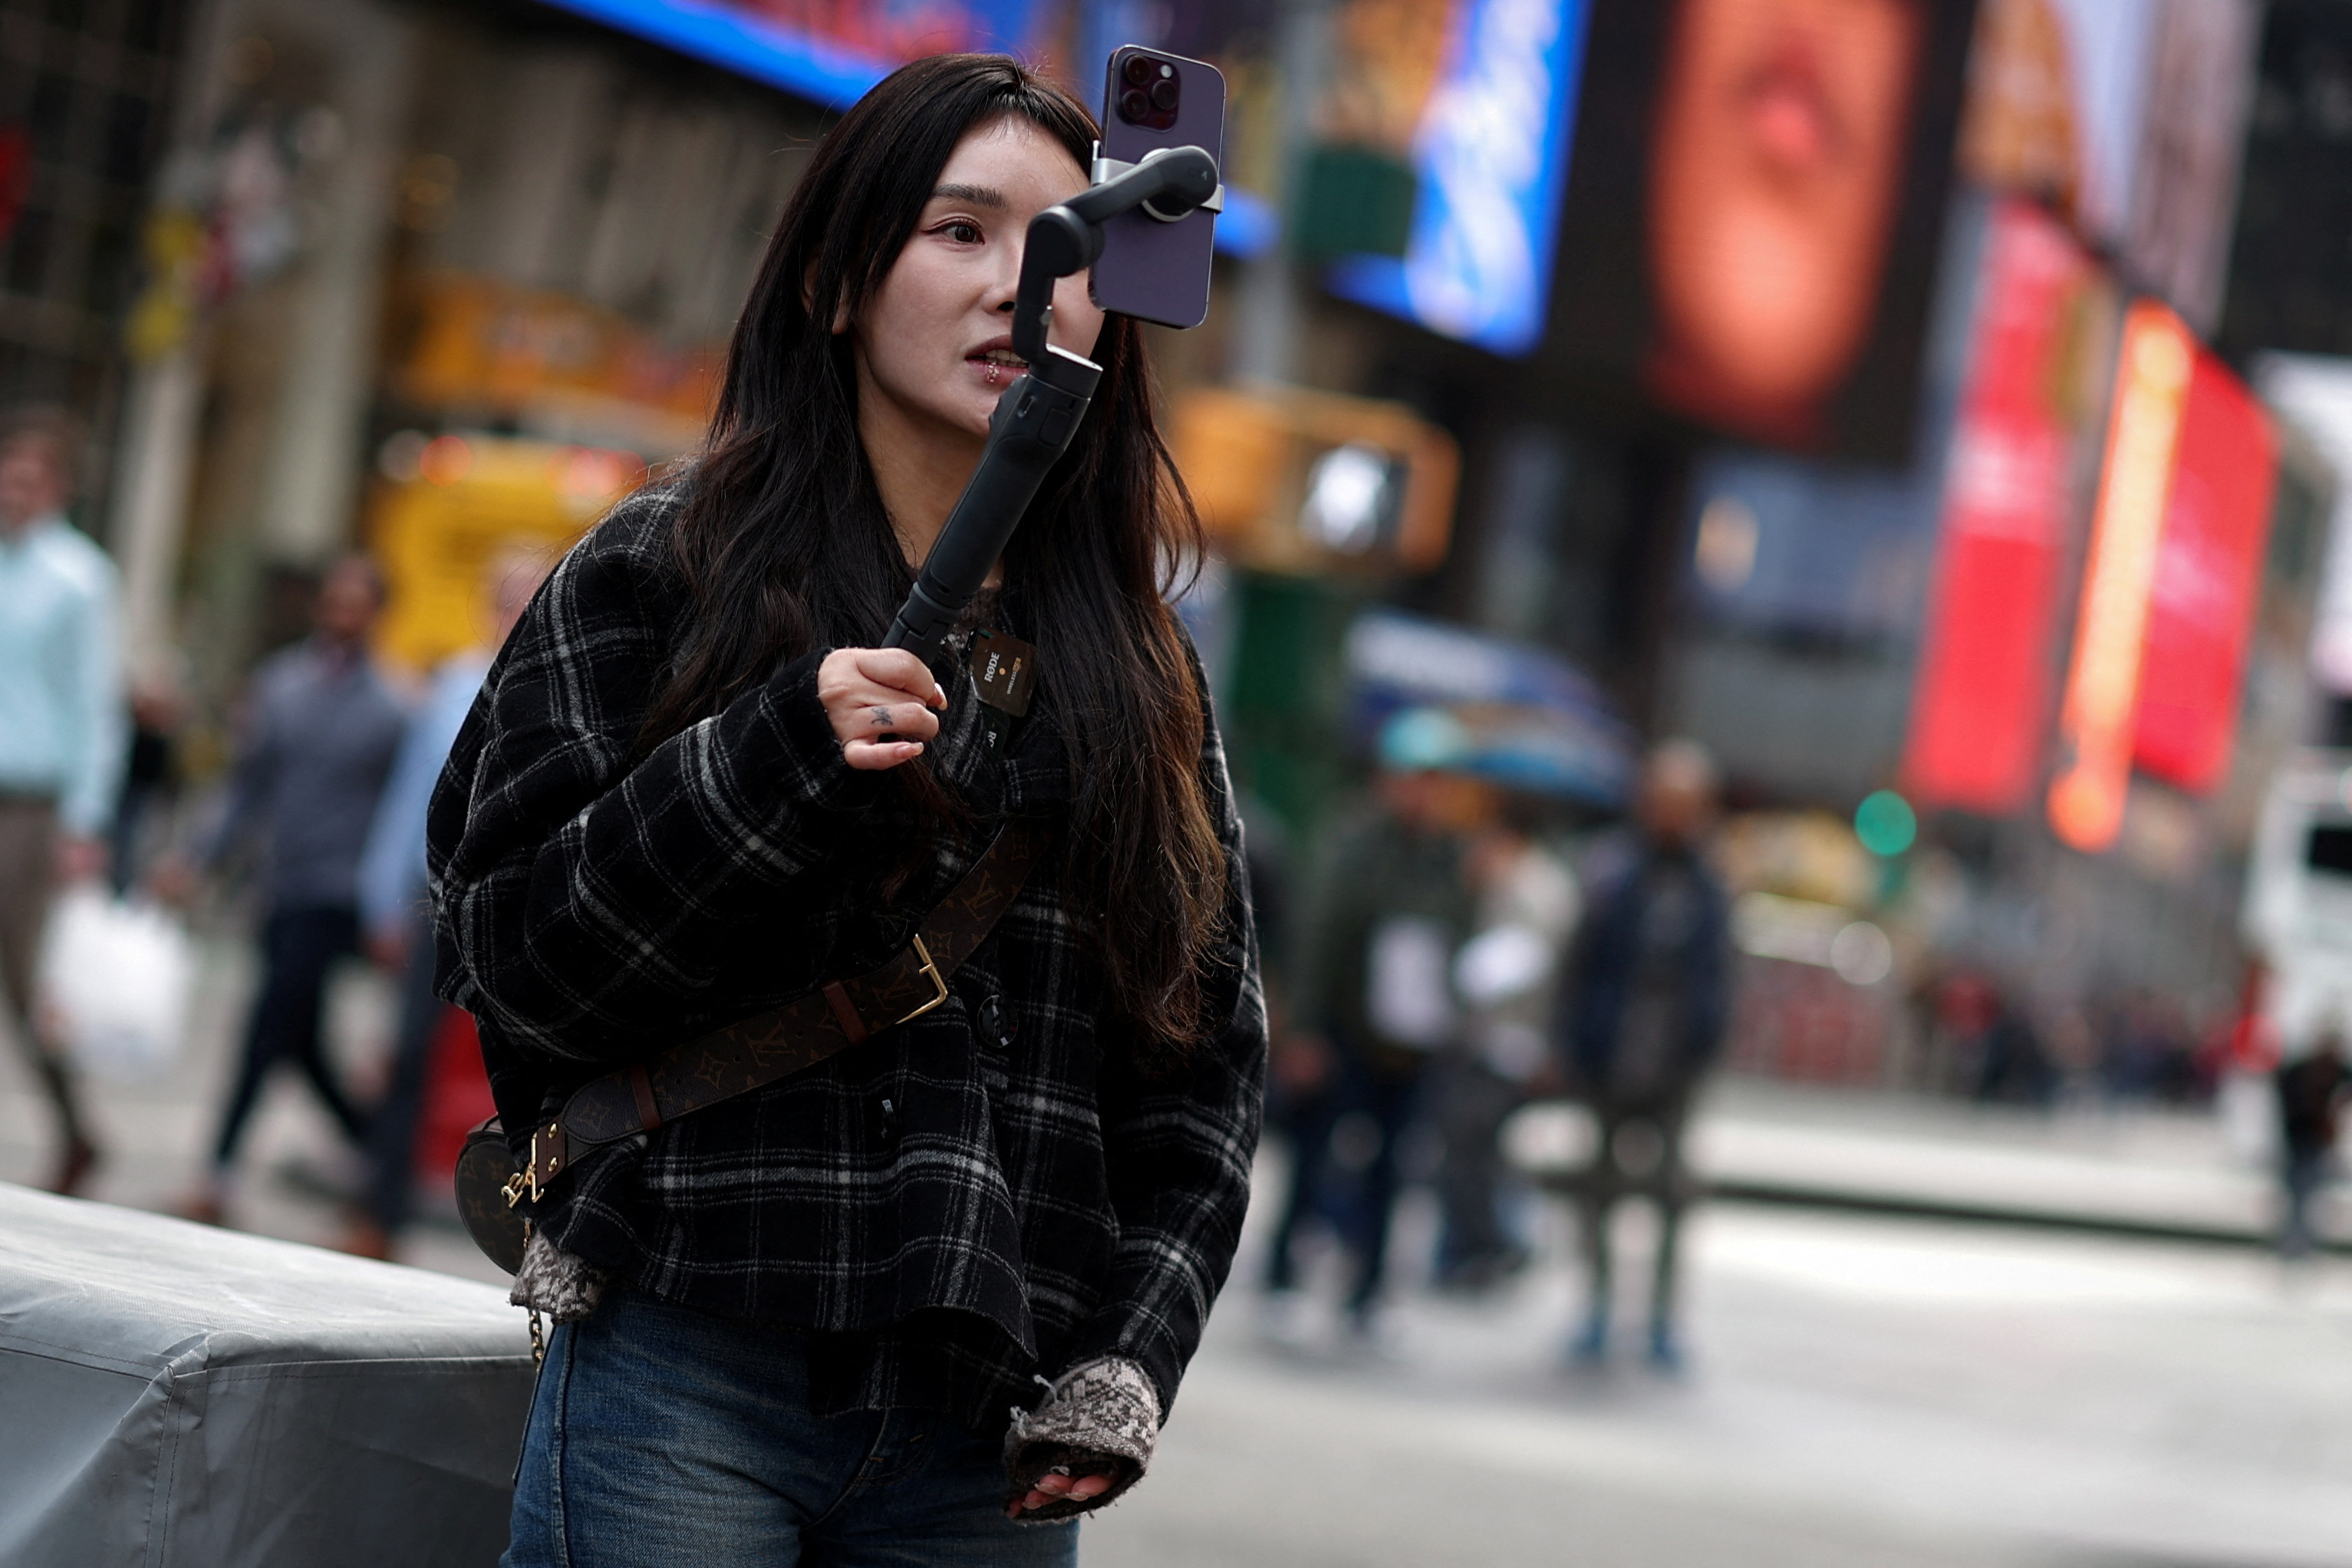 TikTok users in Times Square in New York City